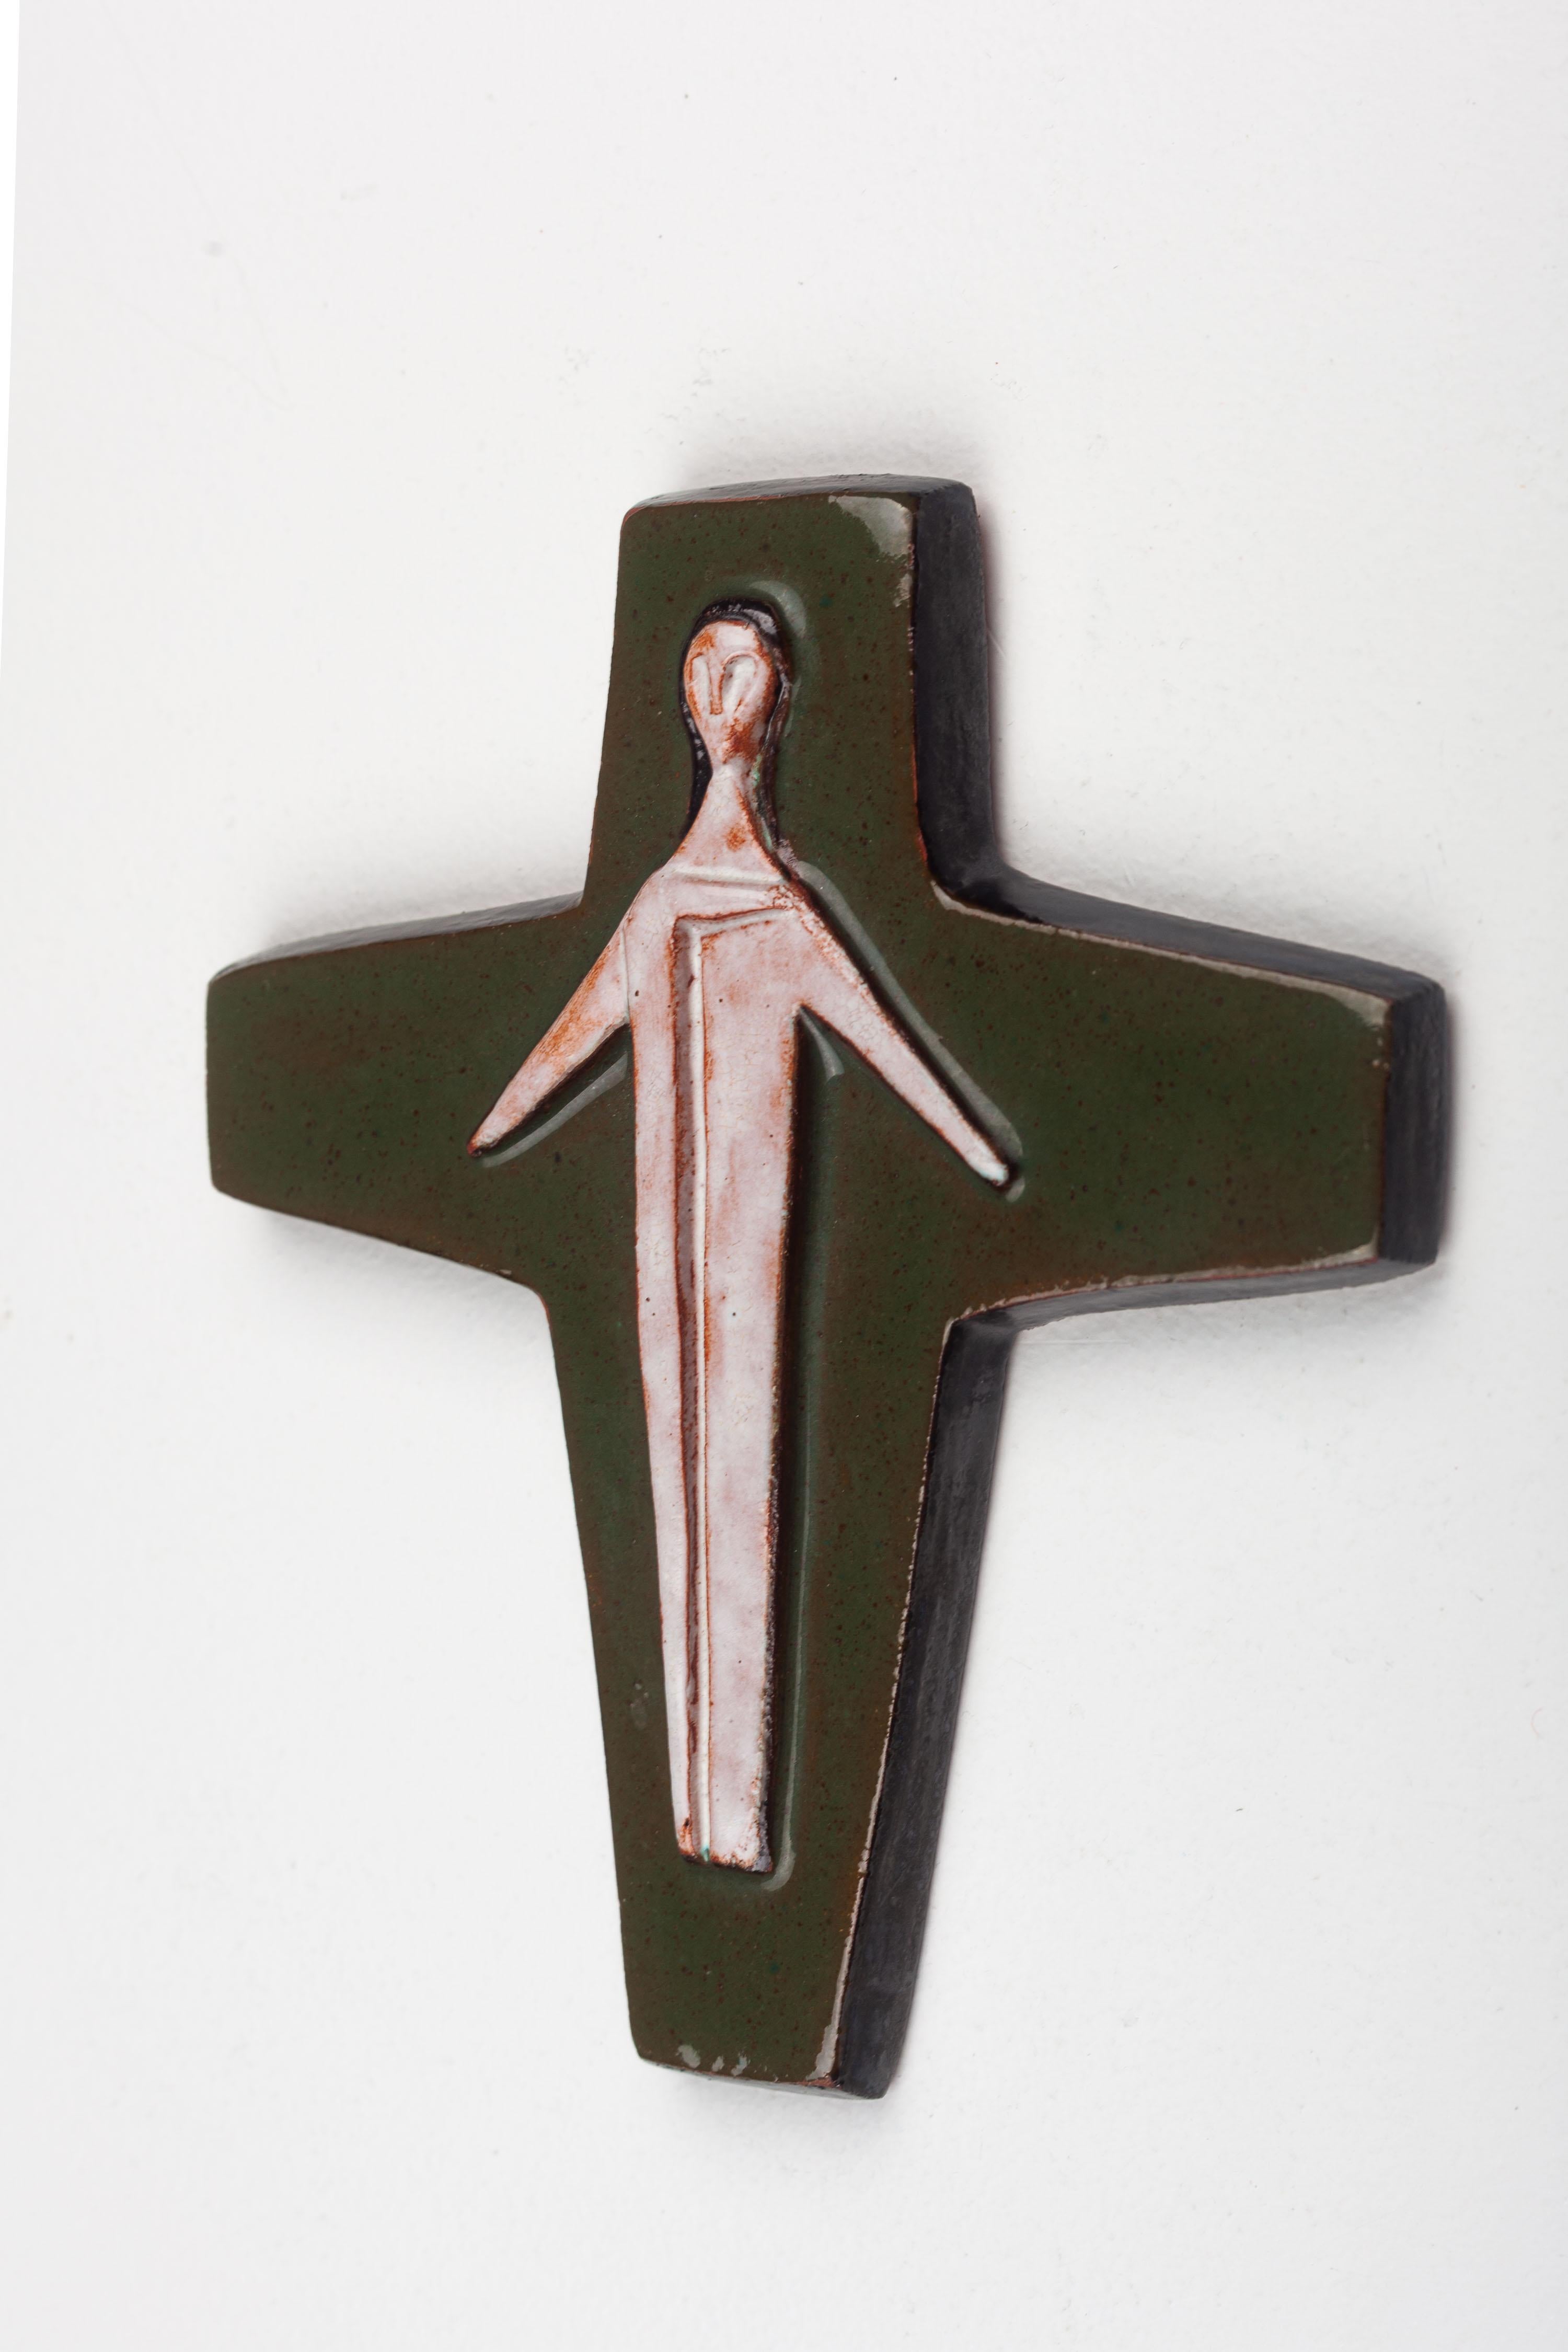 Midcentury European Glossy Ceramic Cross - Otherworldly Christ Figure For Sale 1